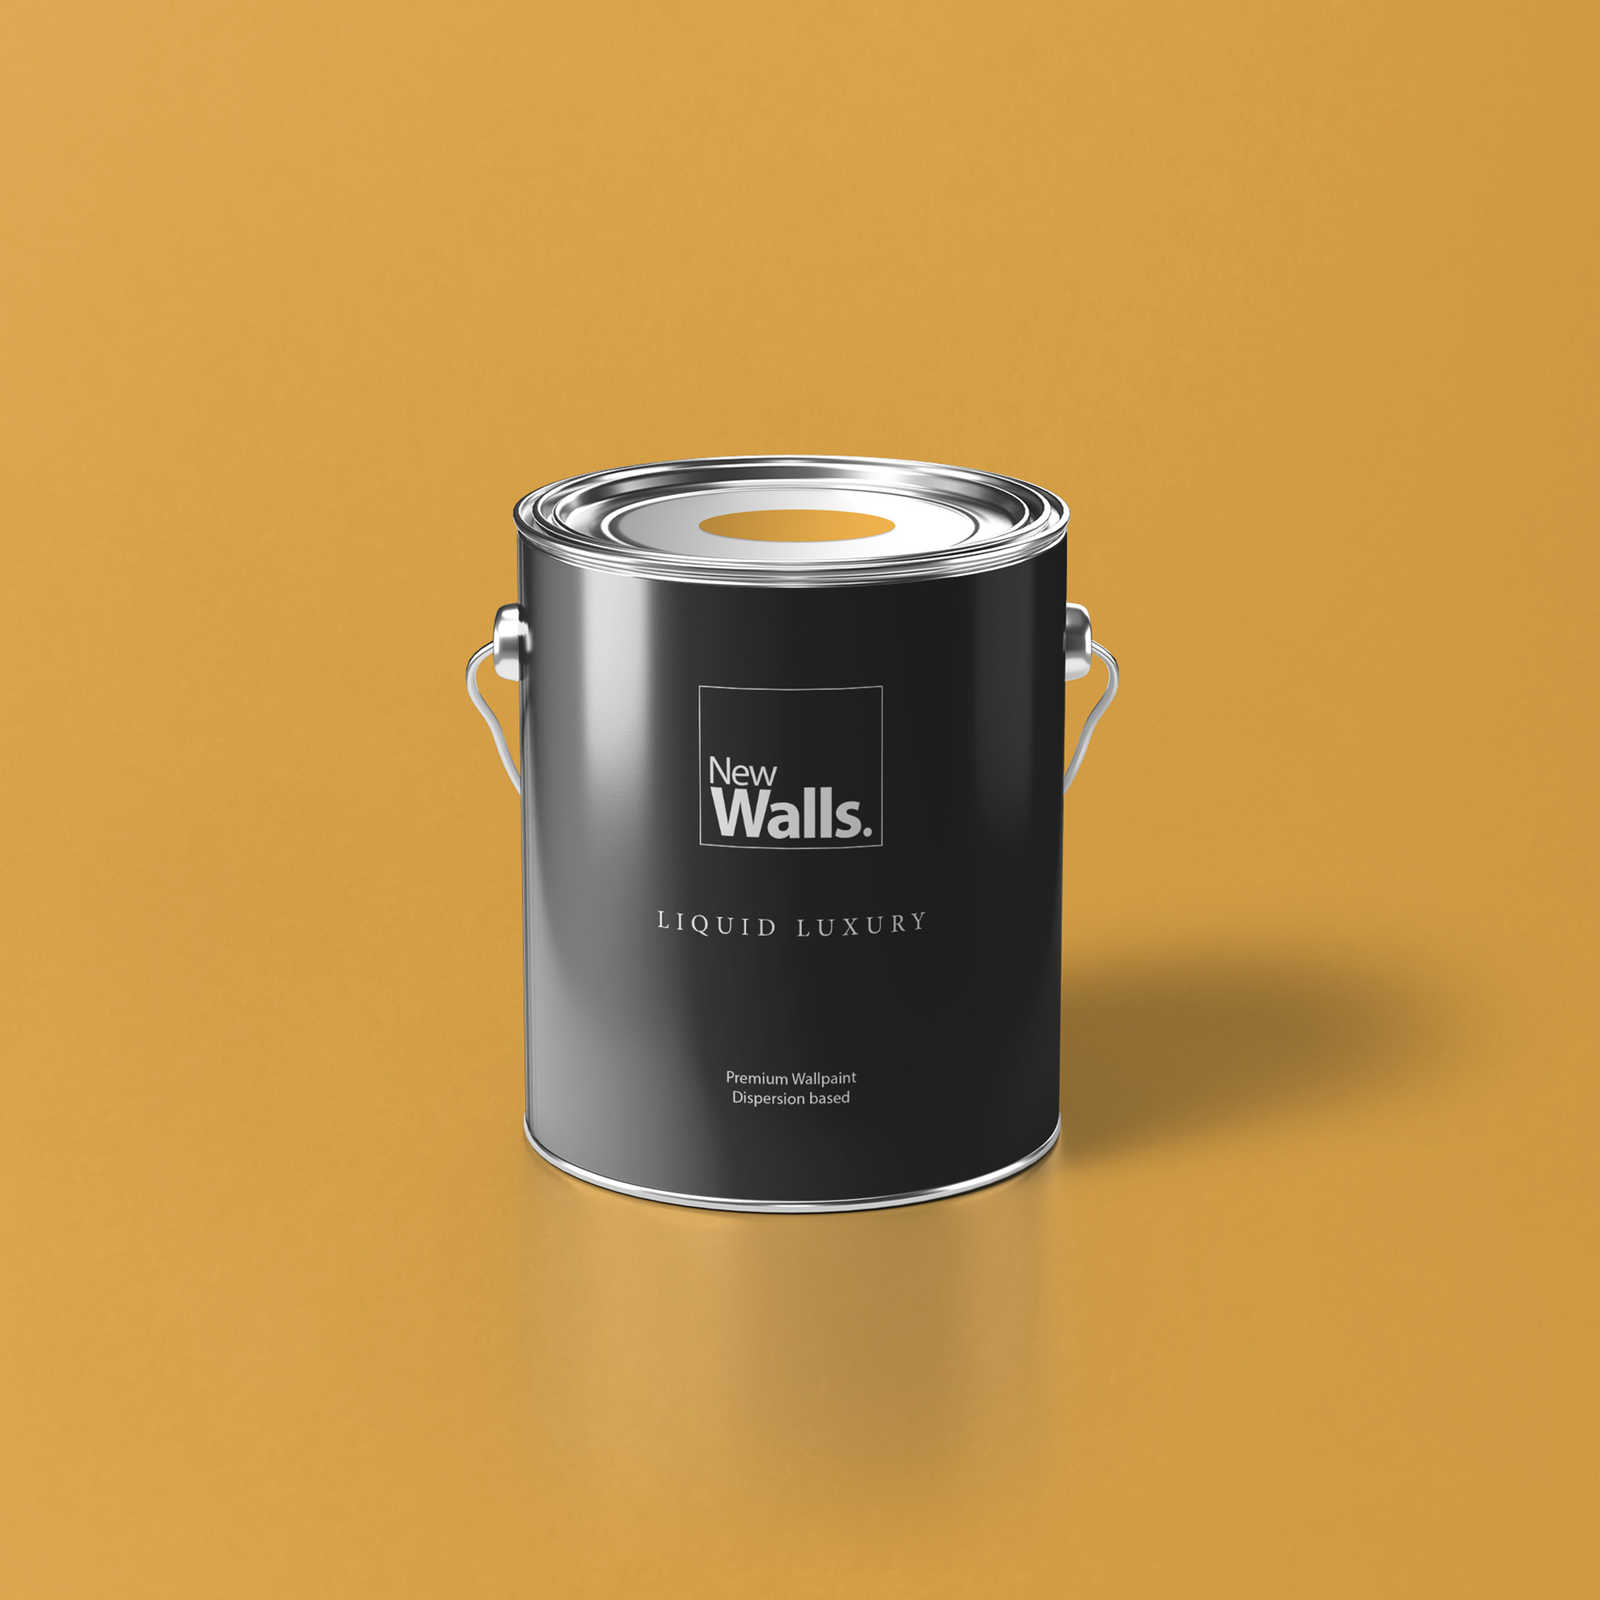 Premium Wandfarbe kräftiges Safrangelb »Juicy Yellow« NW806 – 2,5 Liter
